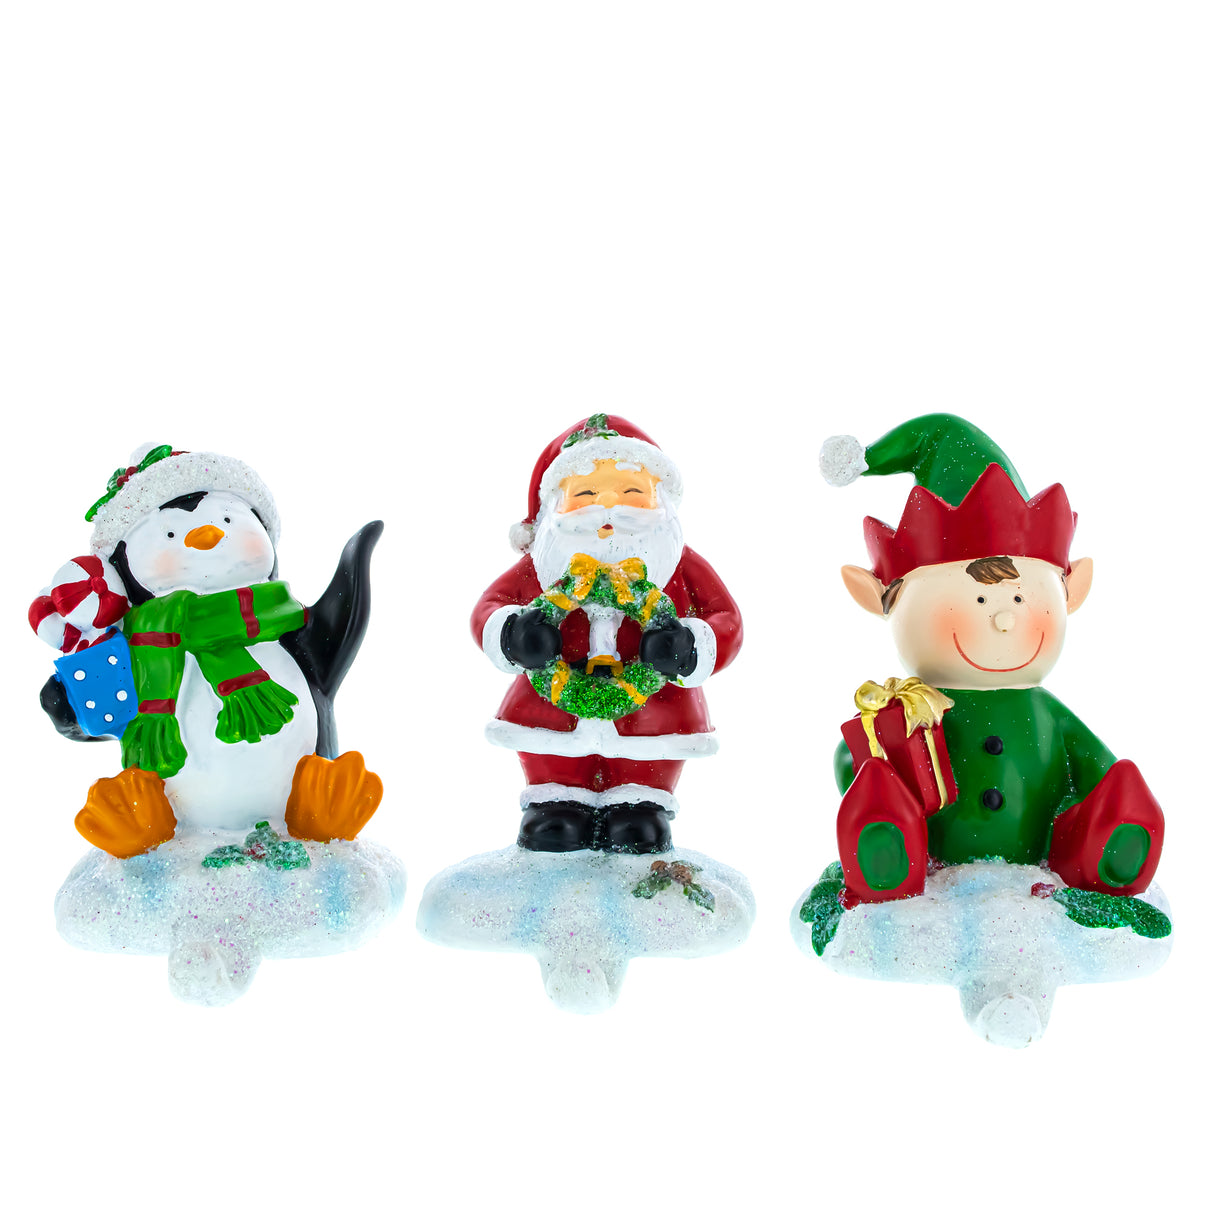 Festive Trio: Set of 3 Christmas Stocking Holders - Elf, Santa, and Penguin in Multi color,  shape